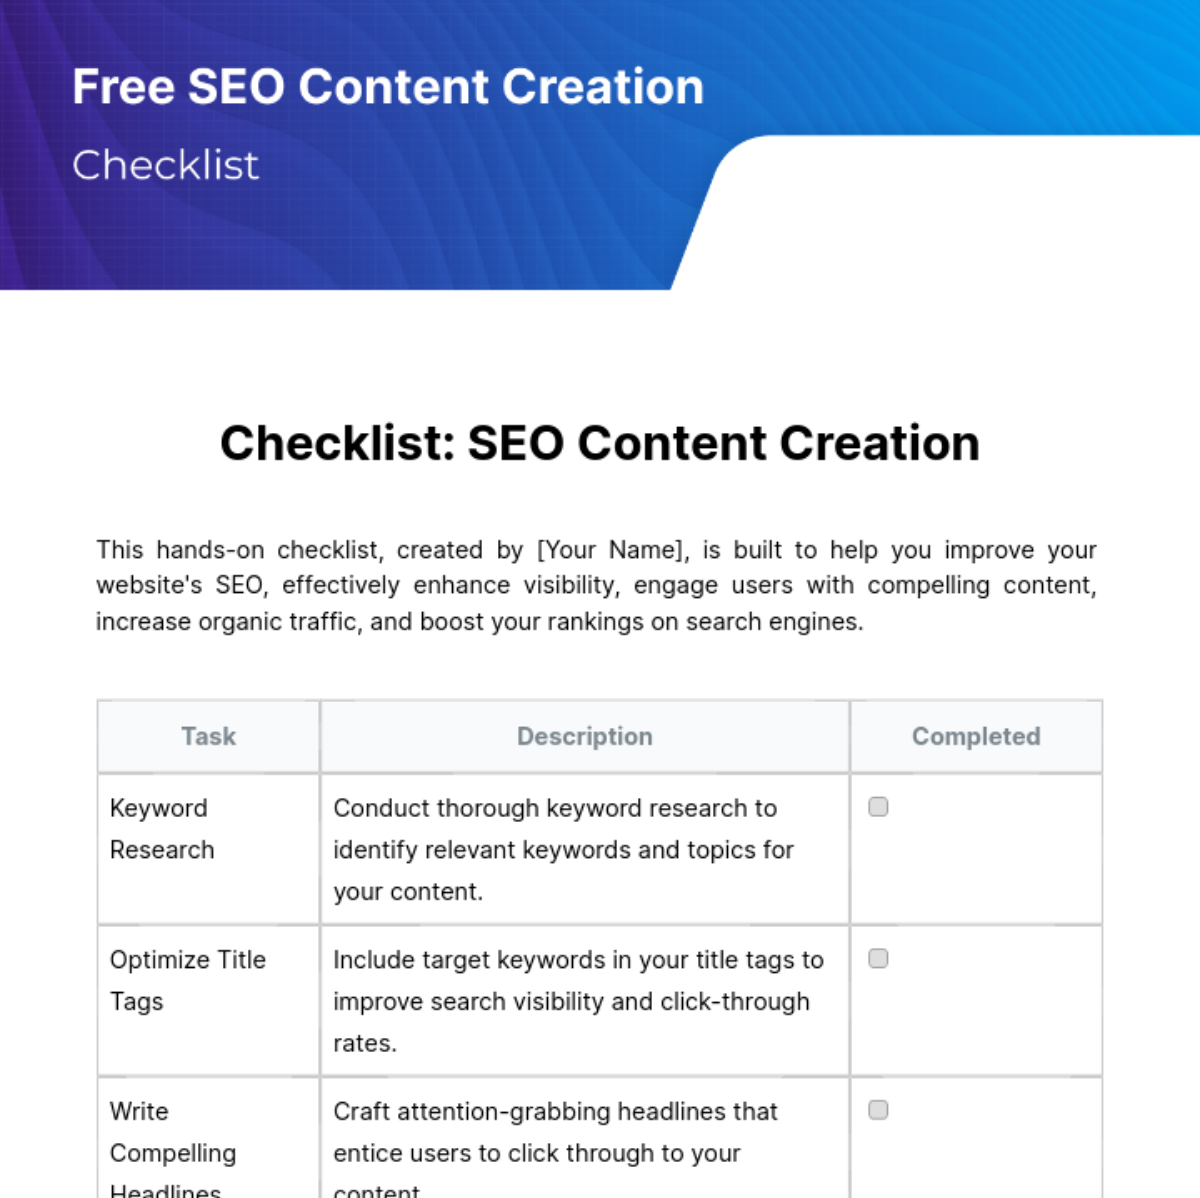 SEO Content Creation Checklist Template